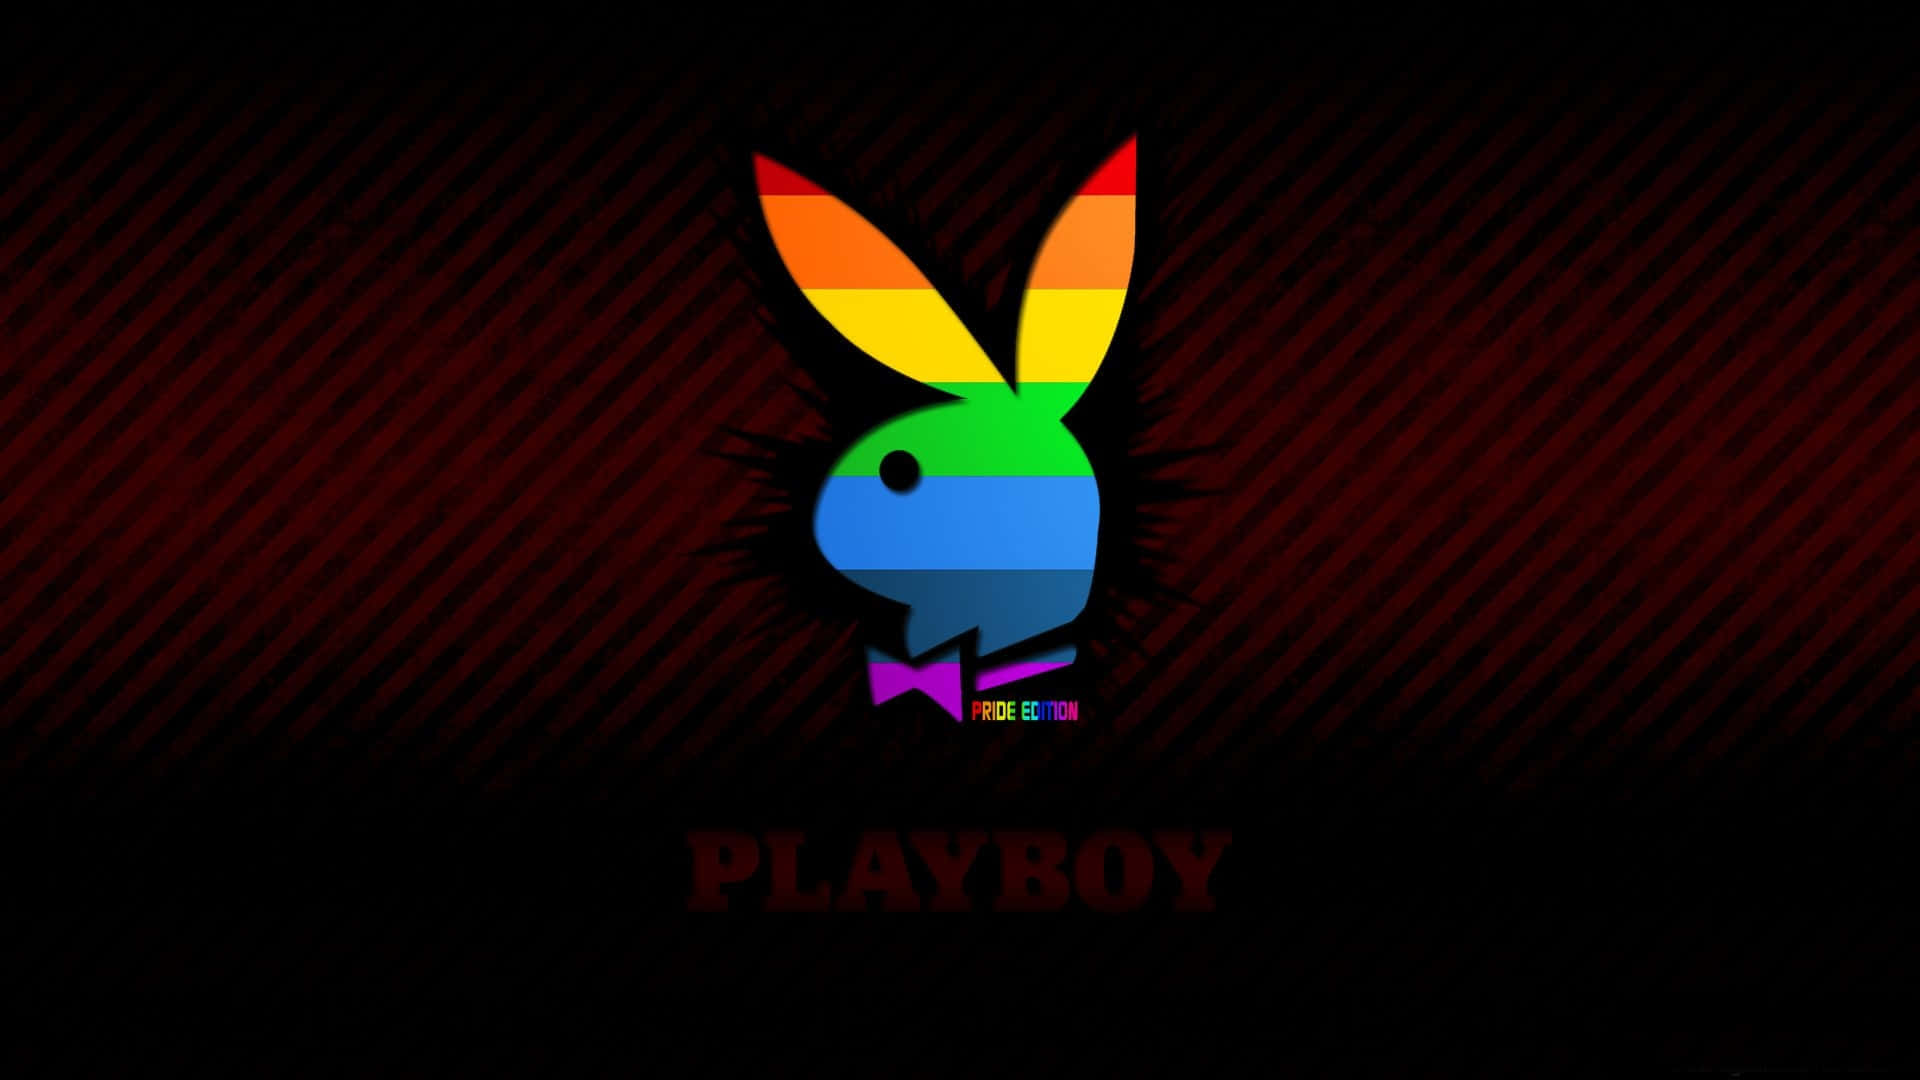 Playboy Rabbit Logo on Black Background